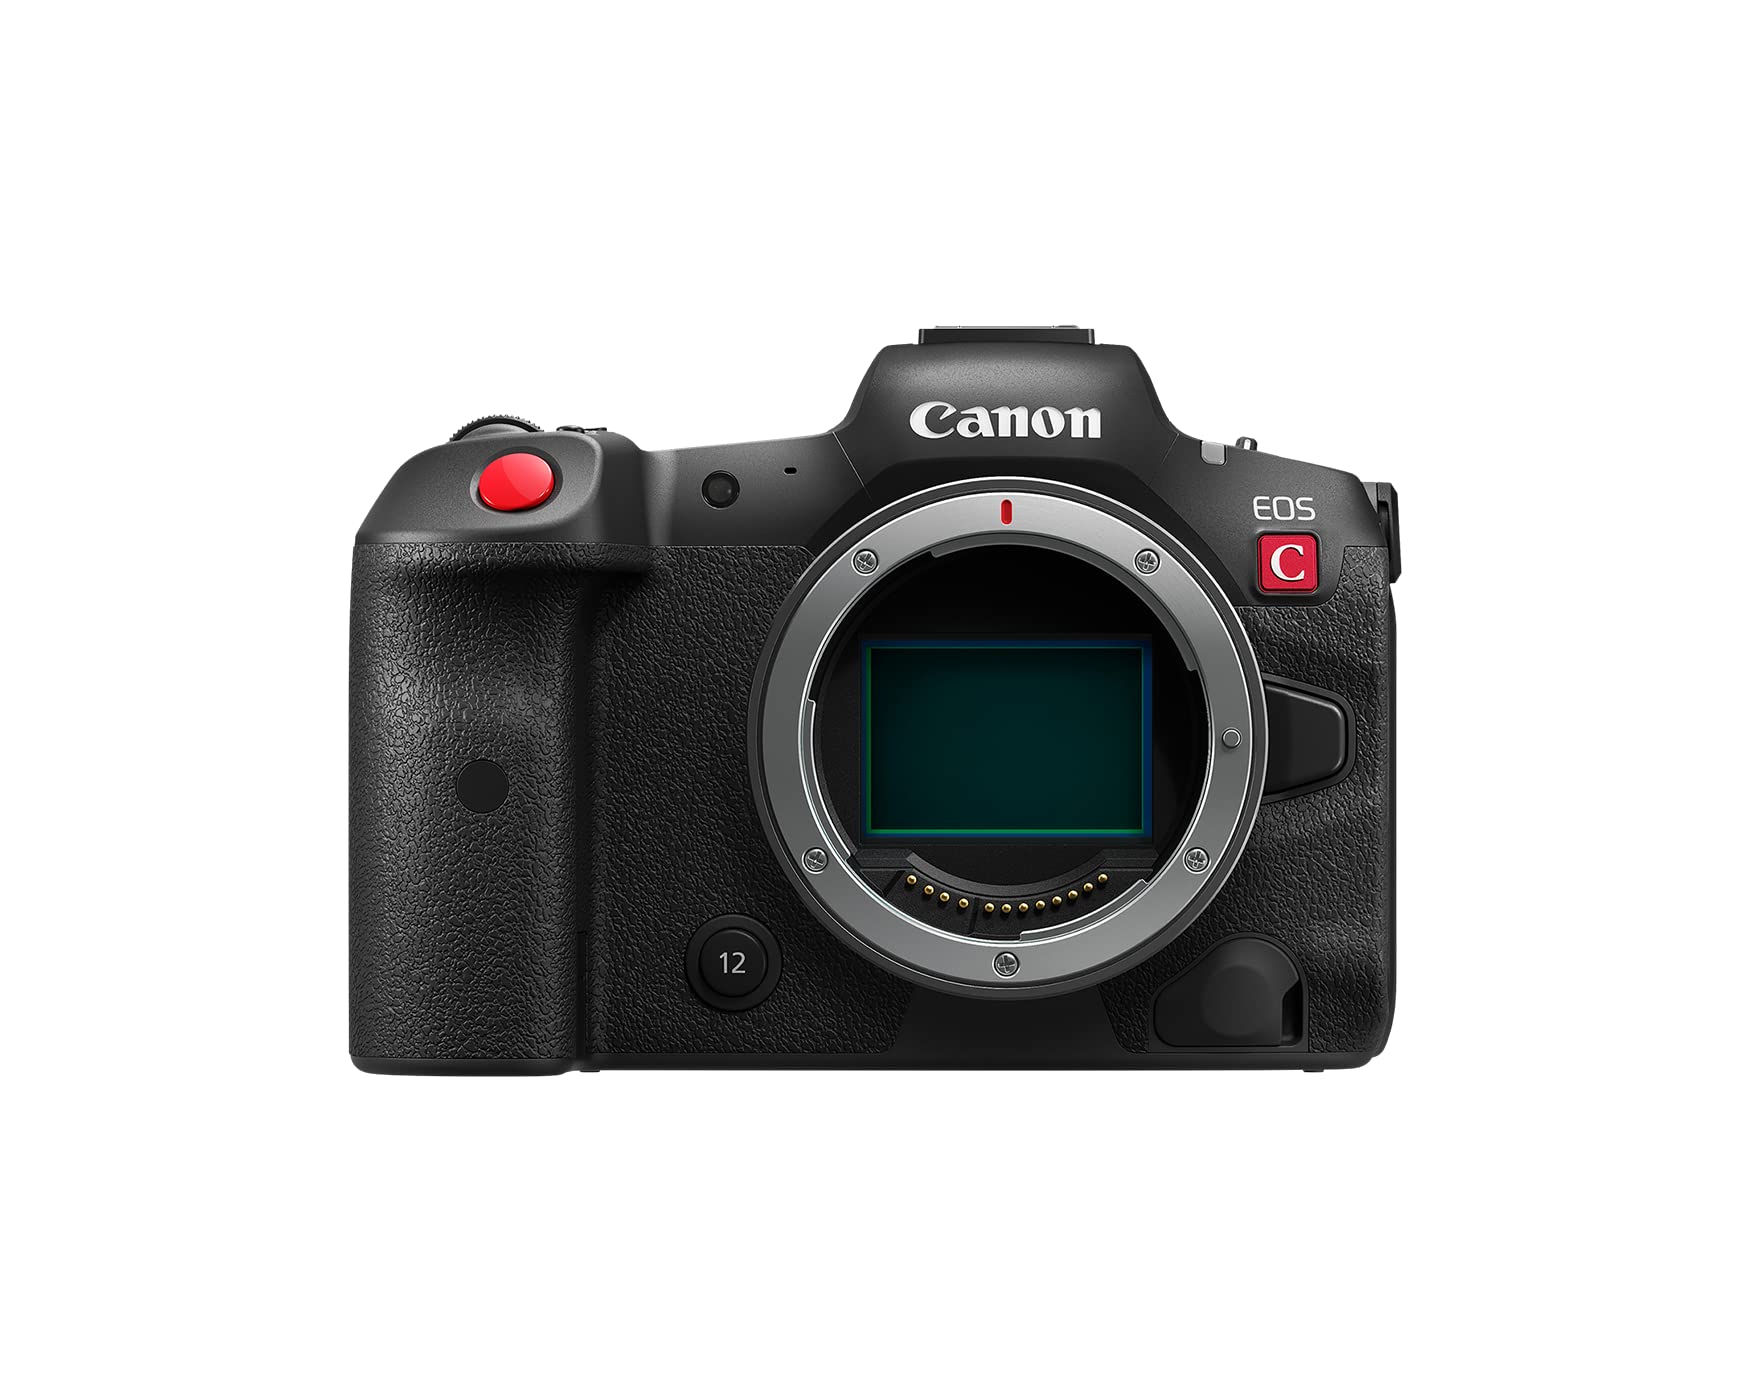 Canon EOS R5 C (Body) - Compact, Mirrorless Cinema EOS Camera - Full-Frame 8K IS & DIGIC X Processor, 8K/60K Internal RAW, HDMI 8K RAW Out, 4K/2K Oversampling - Dual Pixel CMOS AF w/iTR AF X